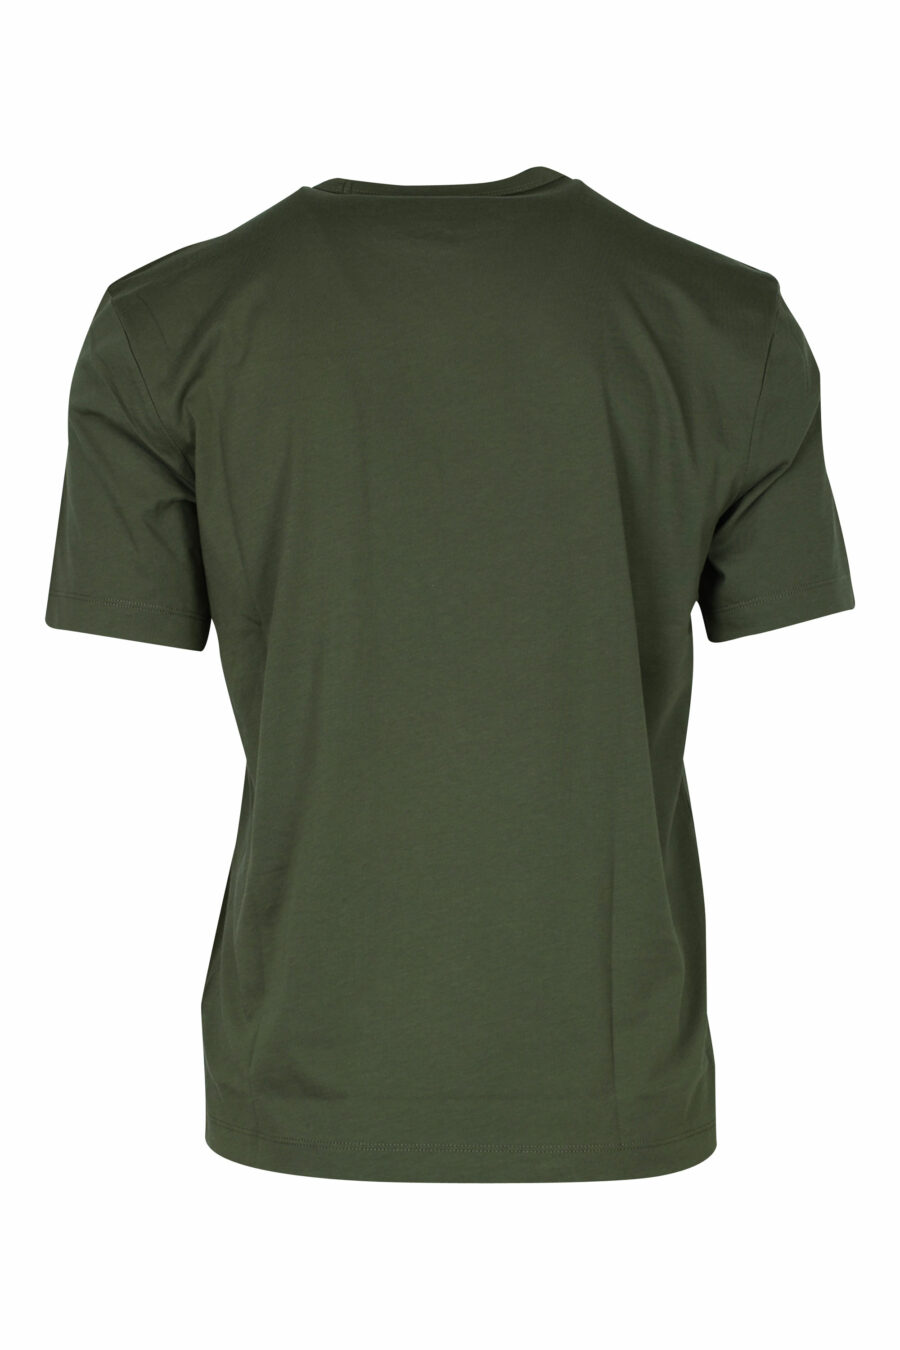 Camiseta verde militar con minilogo estampado bolsillo - 8058610799816 1